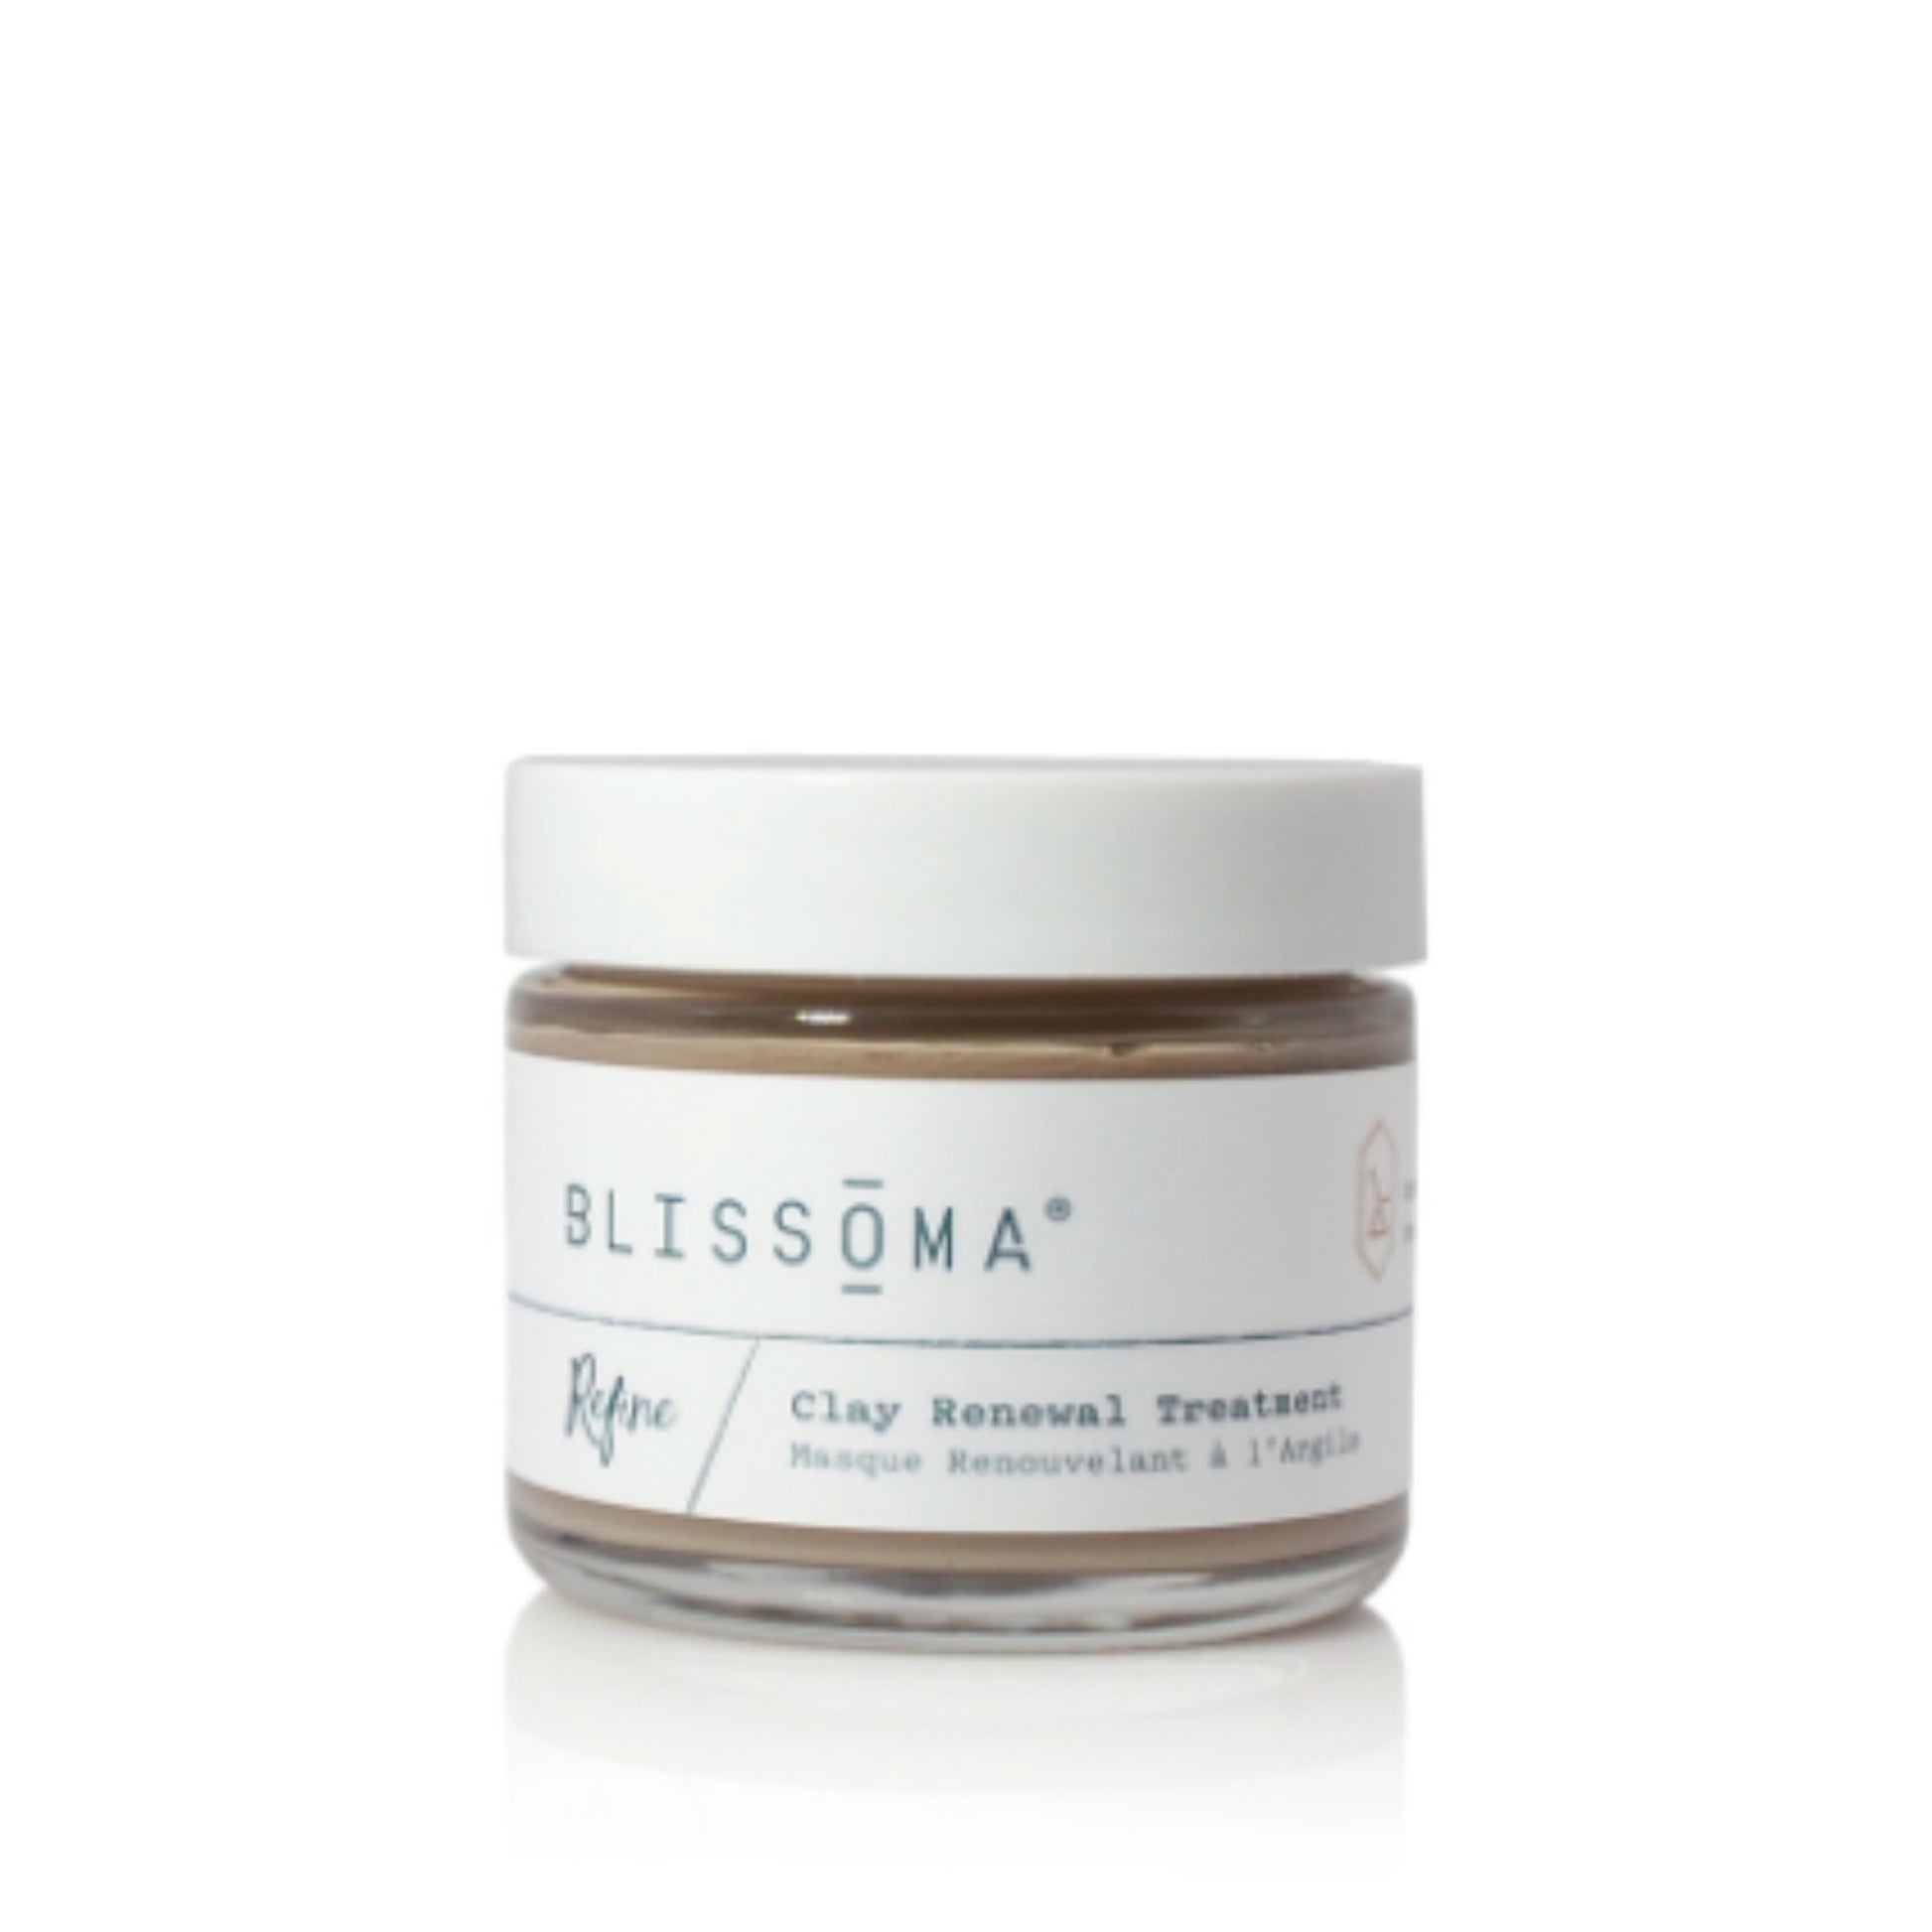 Blissoma - Blissoma Refine Clay Renewal Treatment - ORESTA clean beauty simplified